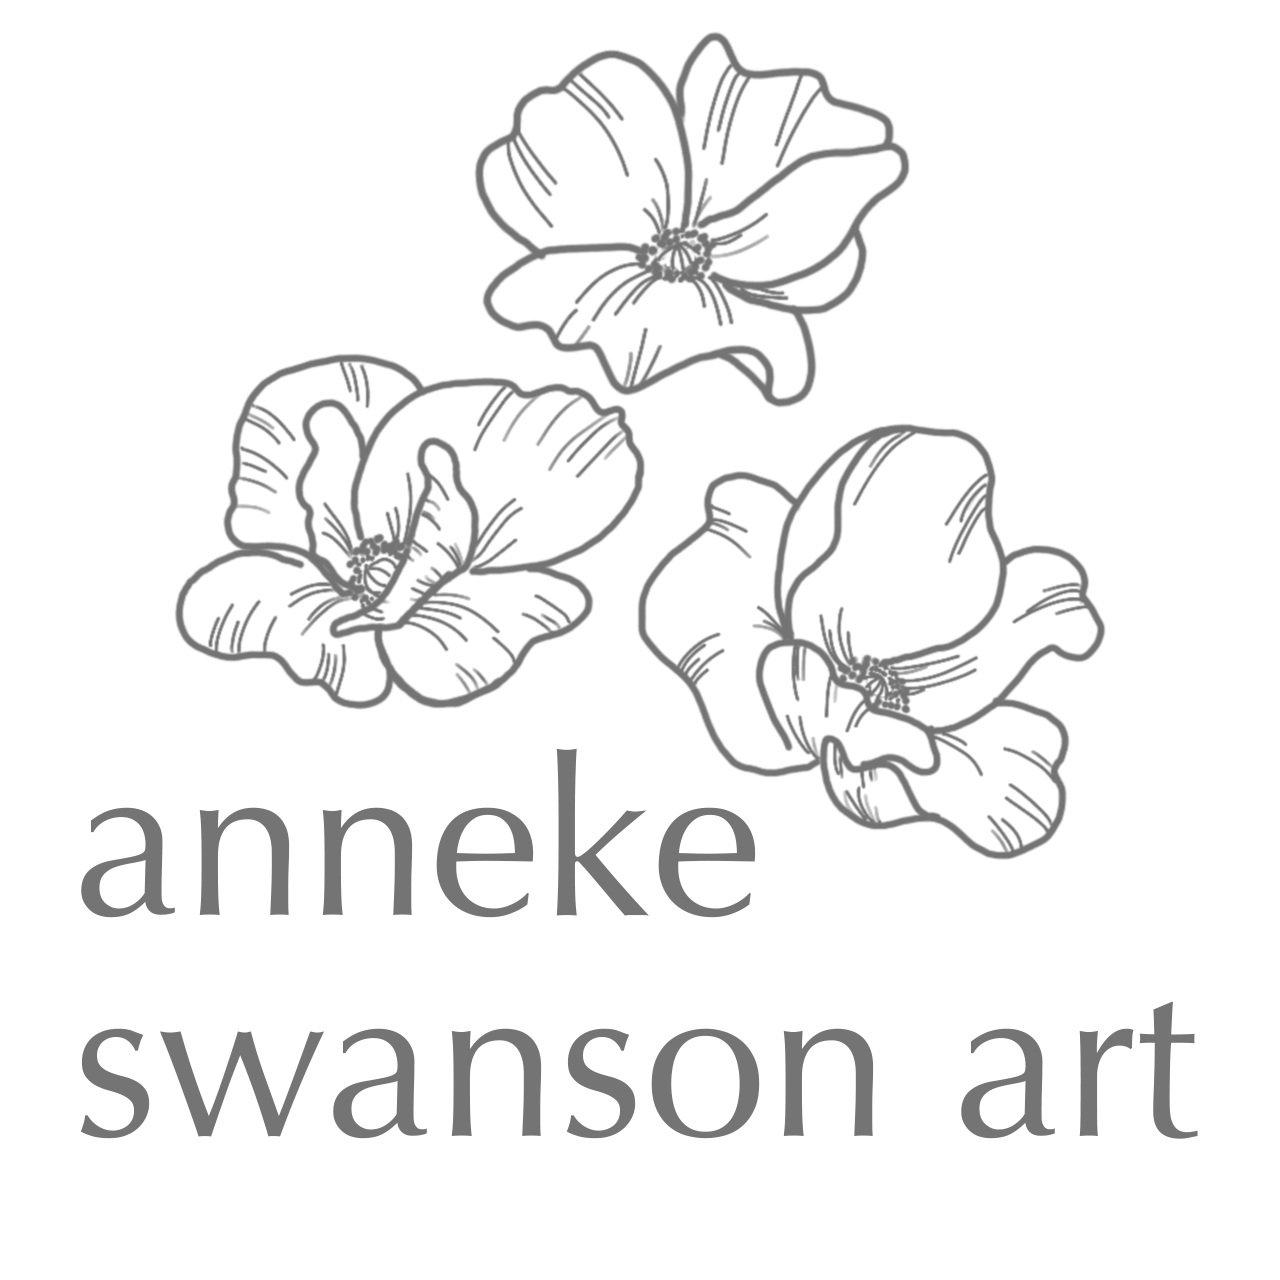 Anneke Swanson